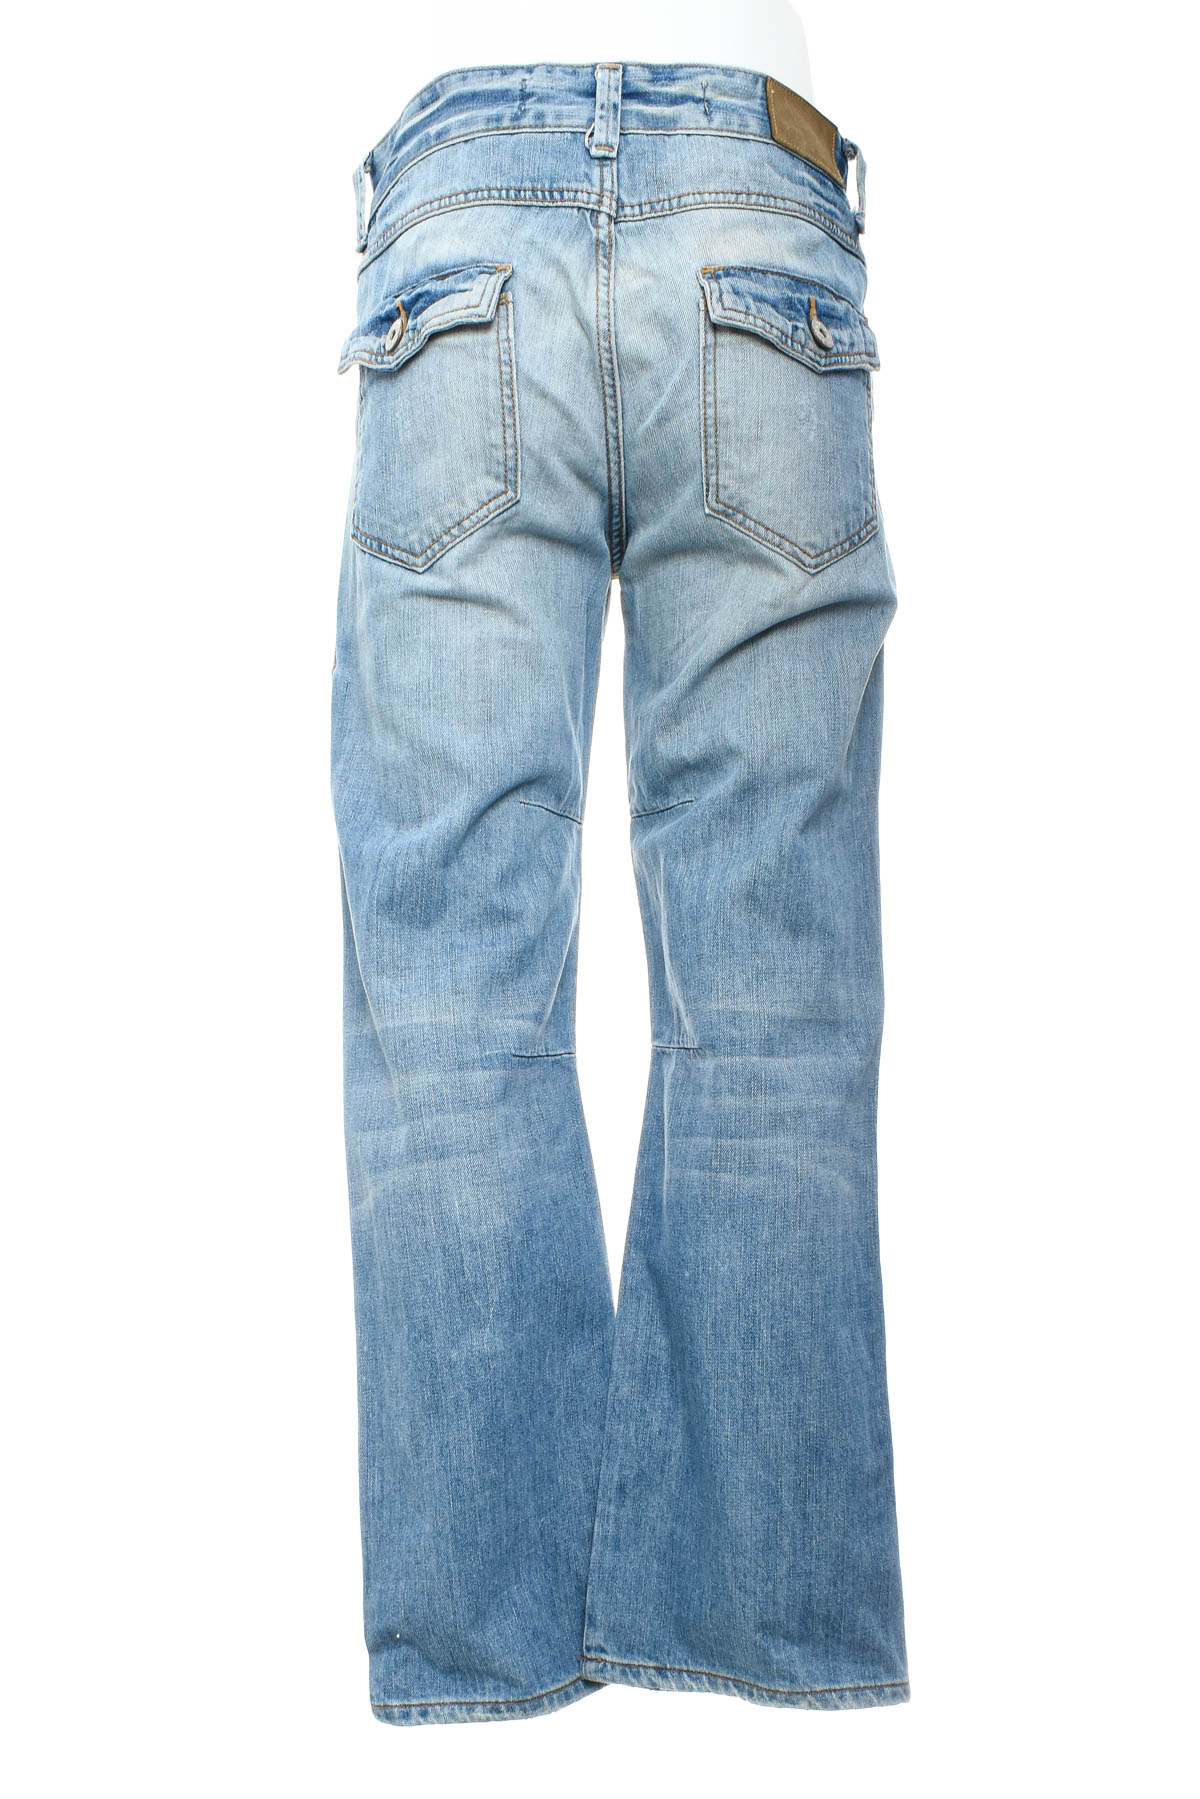 Men's jeans - Burton - 1